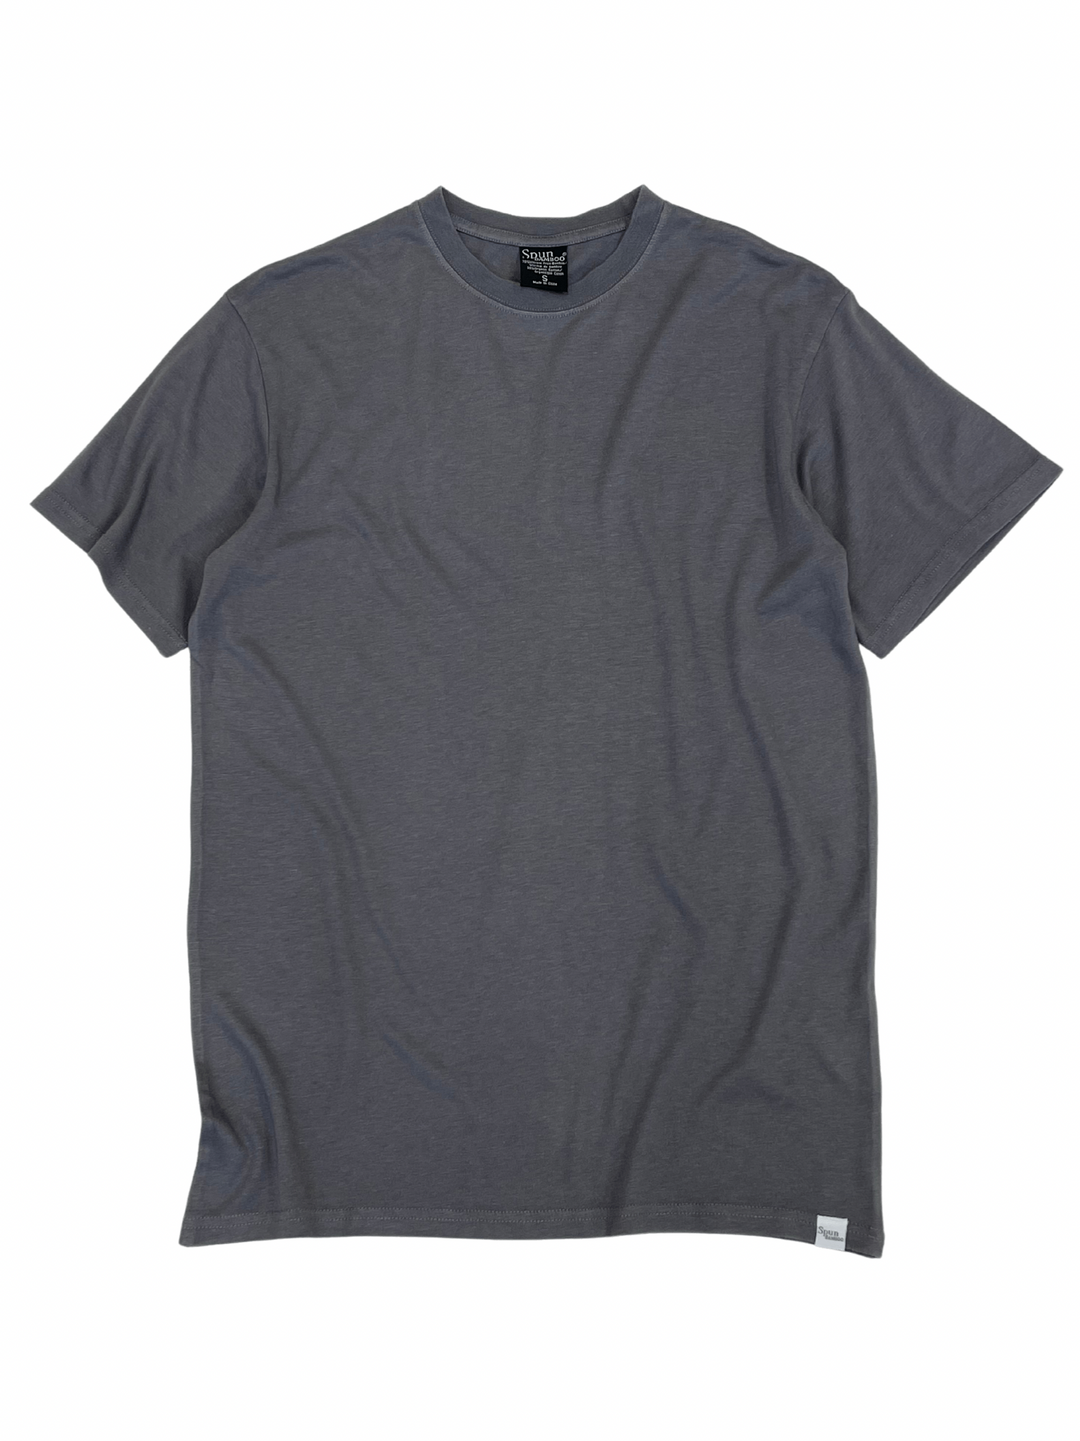 Men's Bamboo Viscose/Organic Cotton Short Sleeve T-Shirt - 5-Pack Mixed Colors